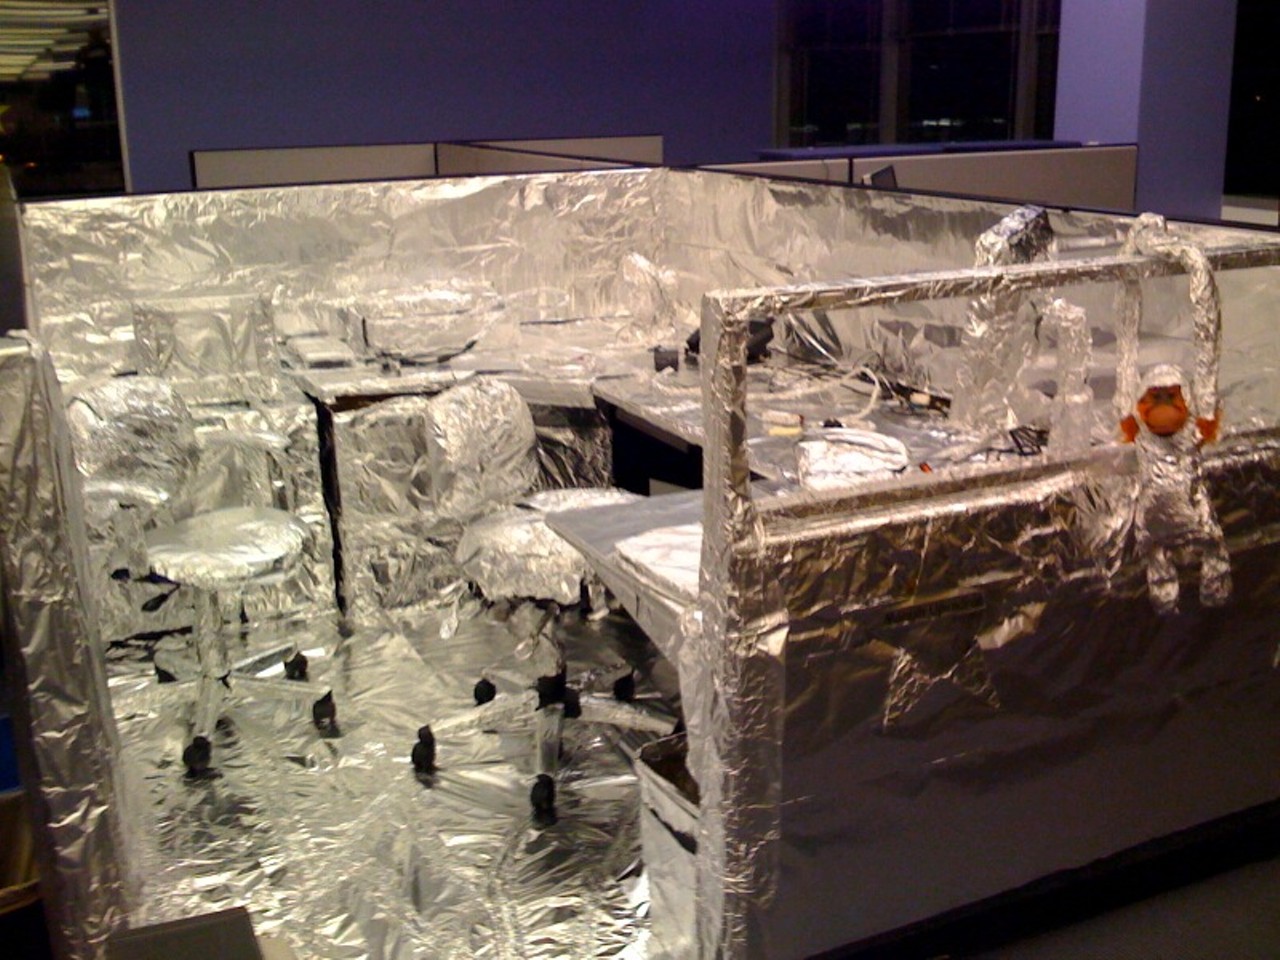 Aluminum foil office. Classic. (Photo via Flickr user Larry Quinn)